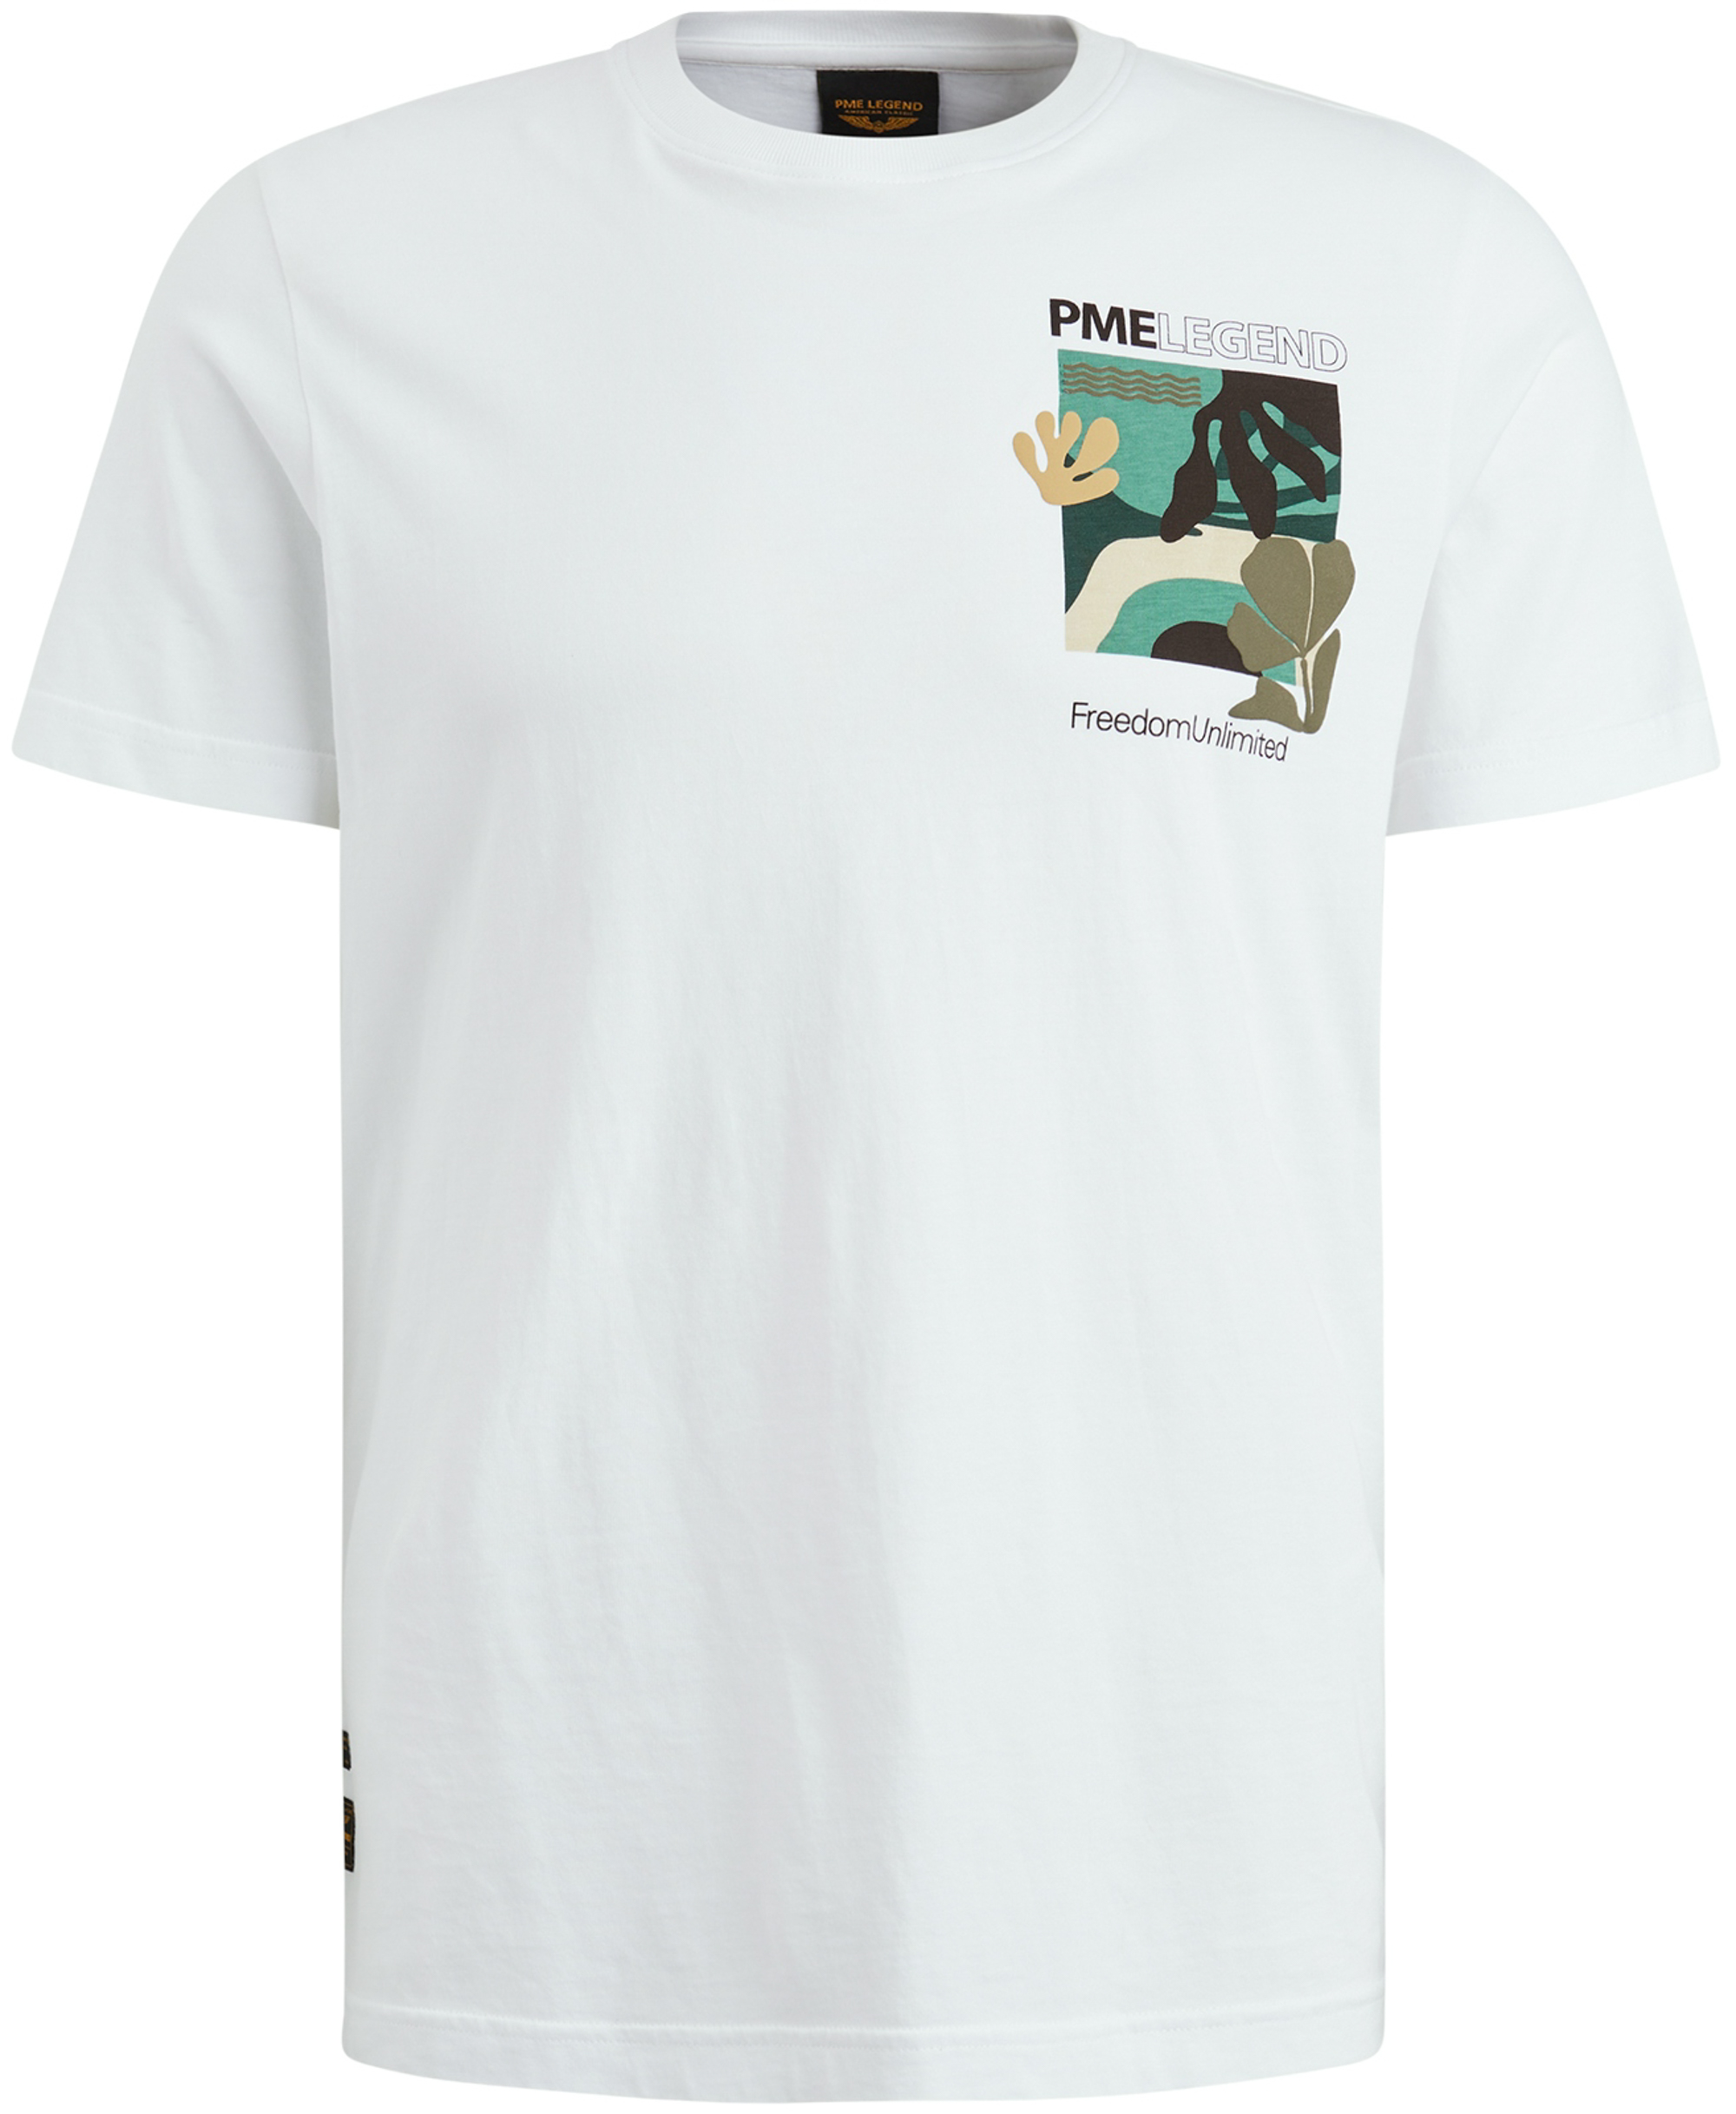 Pme legend R-neck Single Jersey Play T-shirt